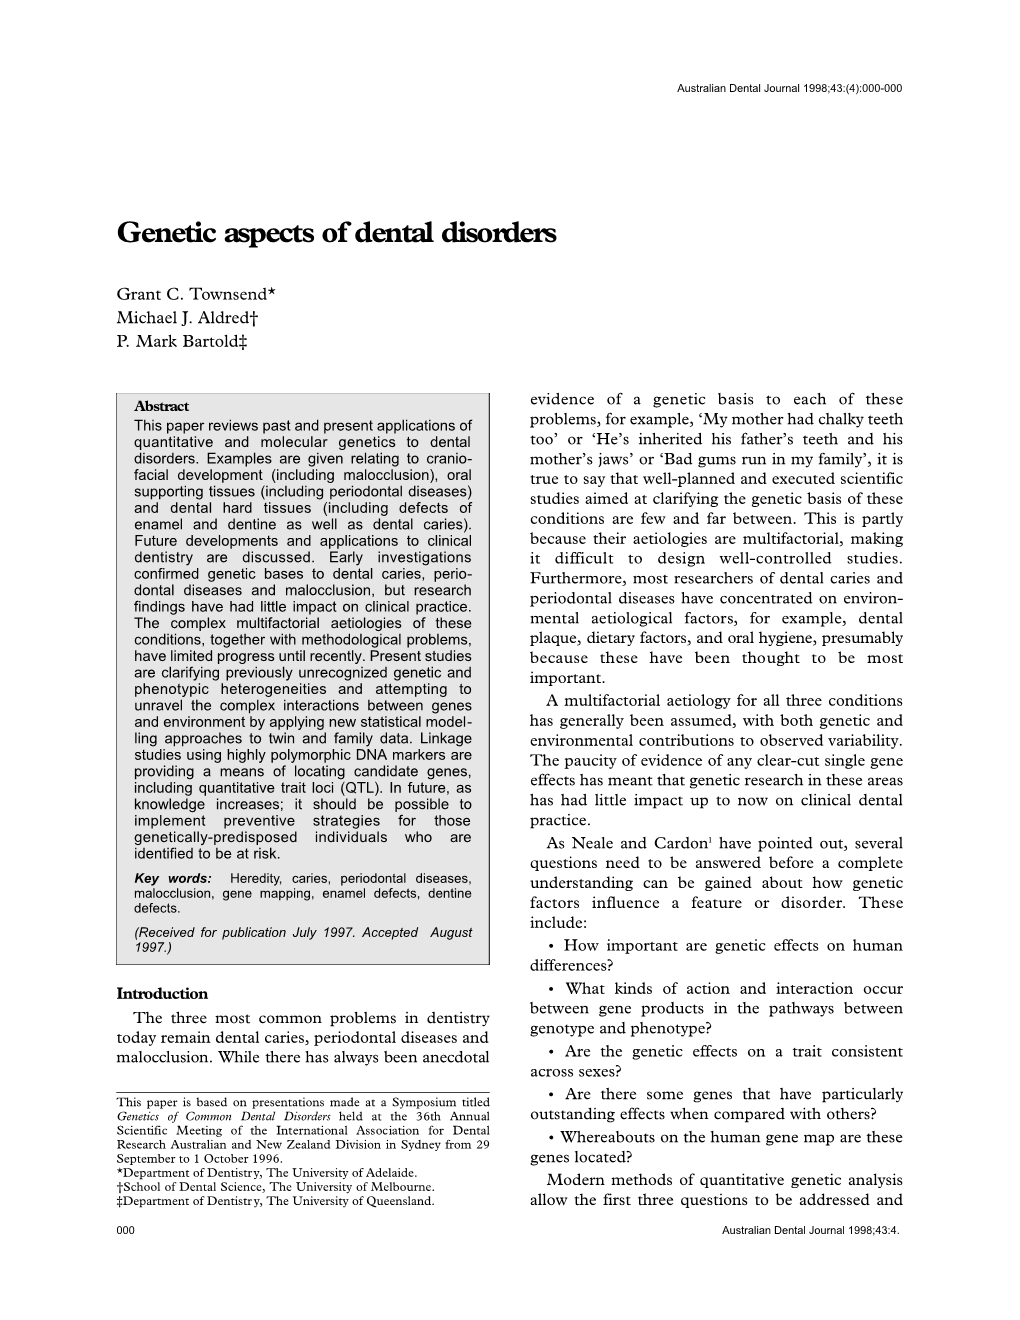 Genetic Aspects of Dental Disorders